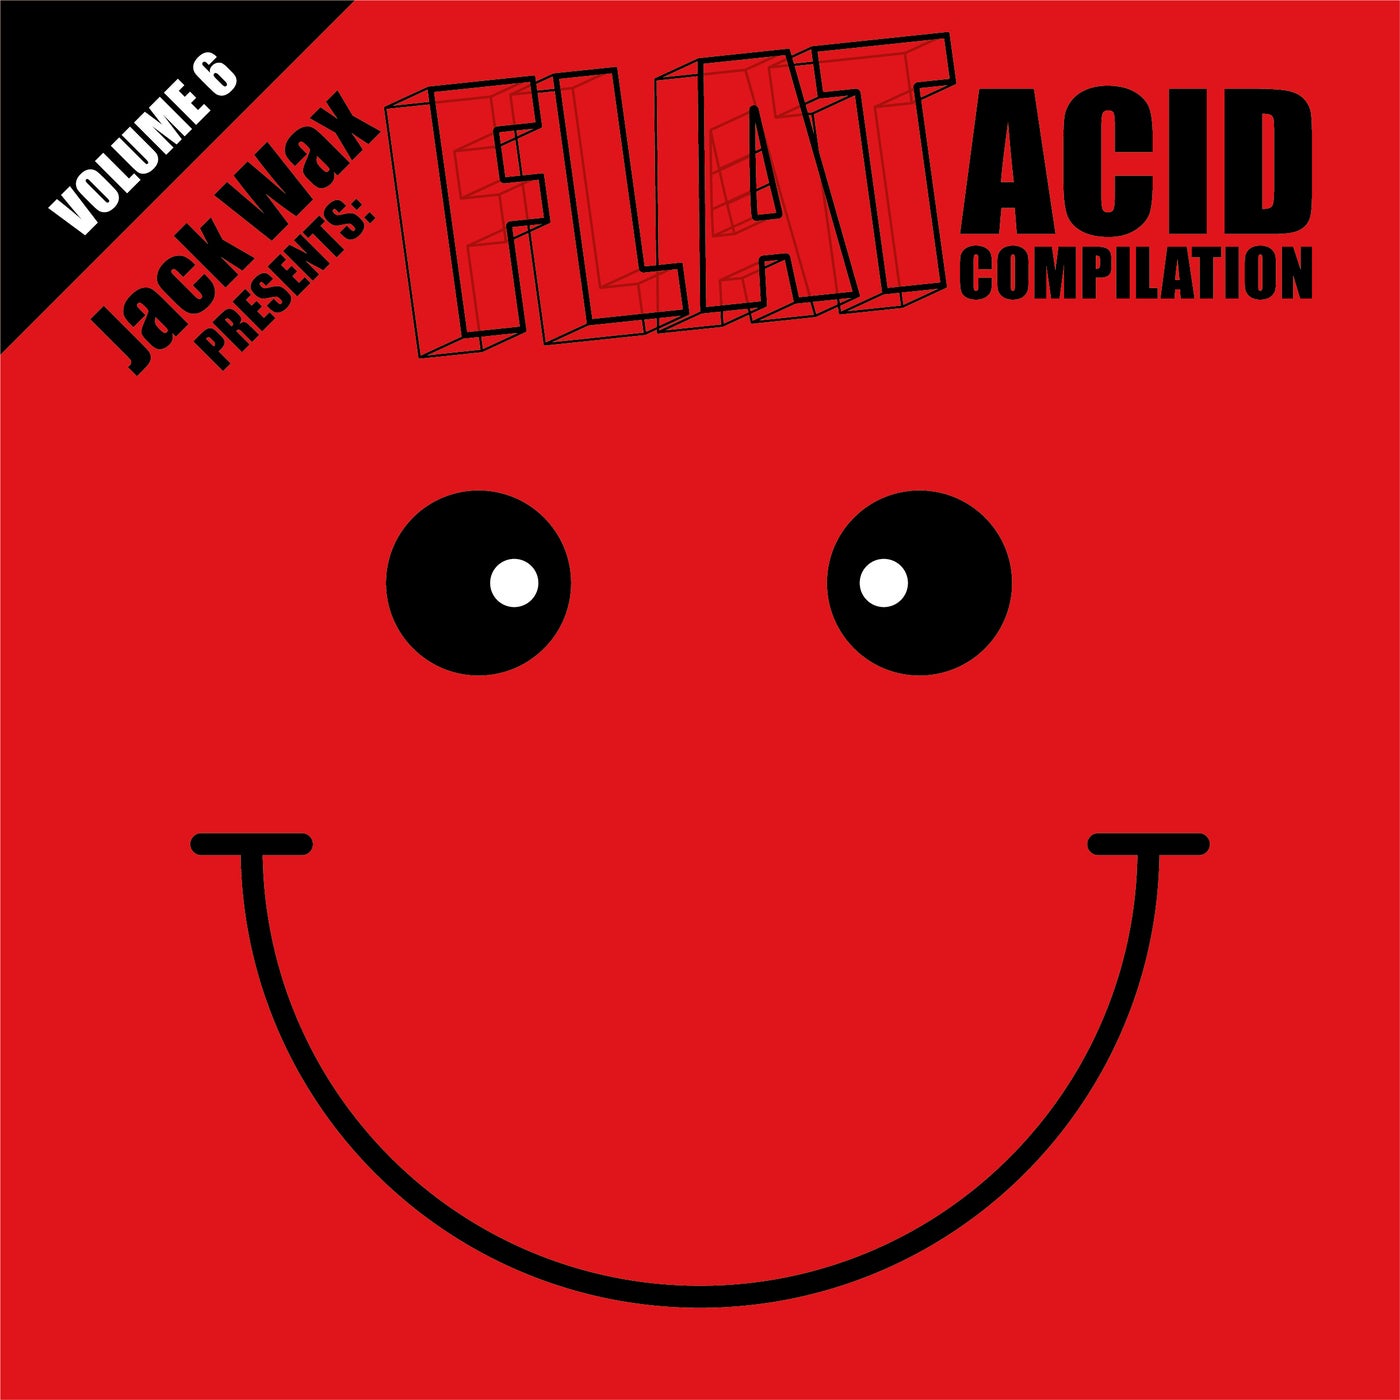 Jack Wax Presents Flat Acid Compilation Volume 6